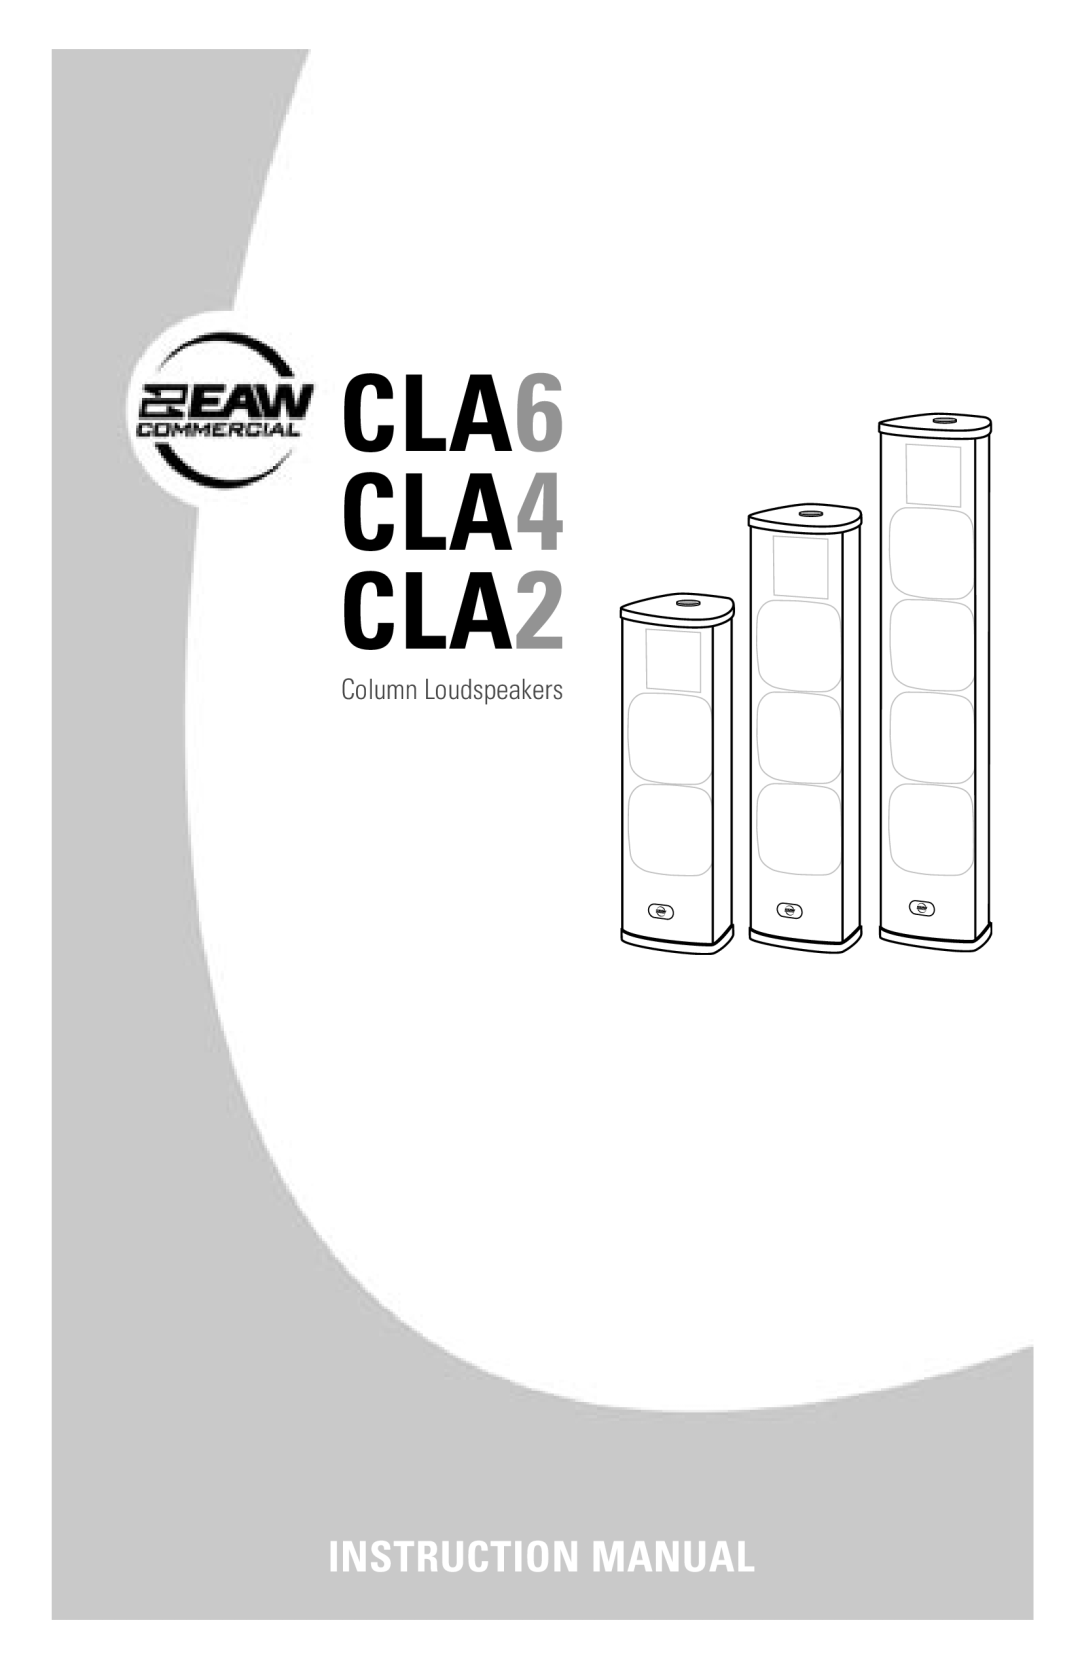 EAW CLA6 CLA4 CLA2 instruction manual Instruction Manual, Column Loudspeakers 